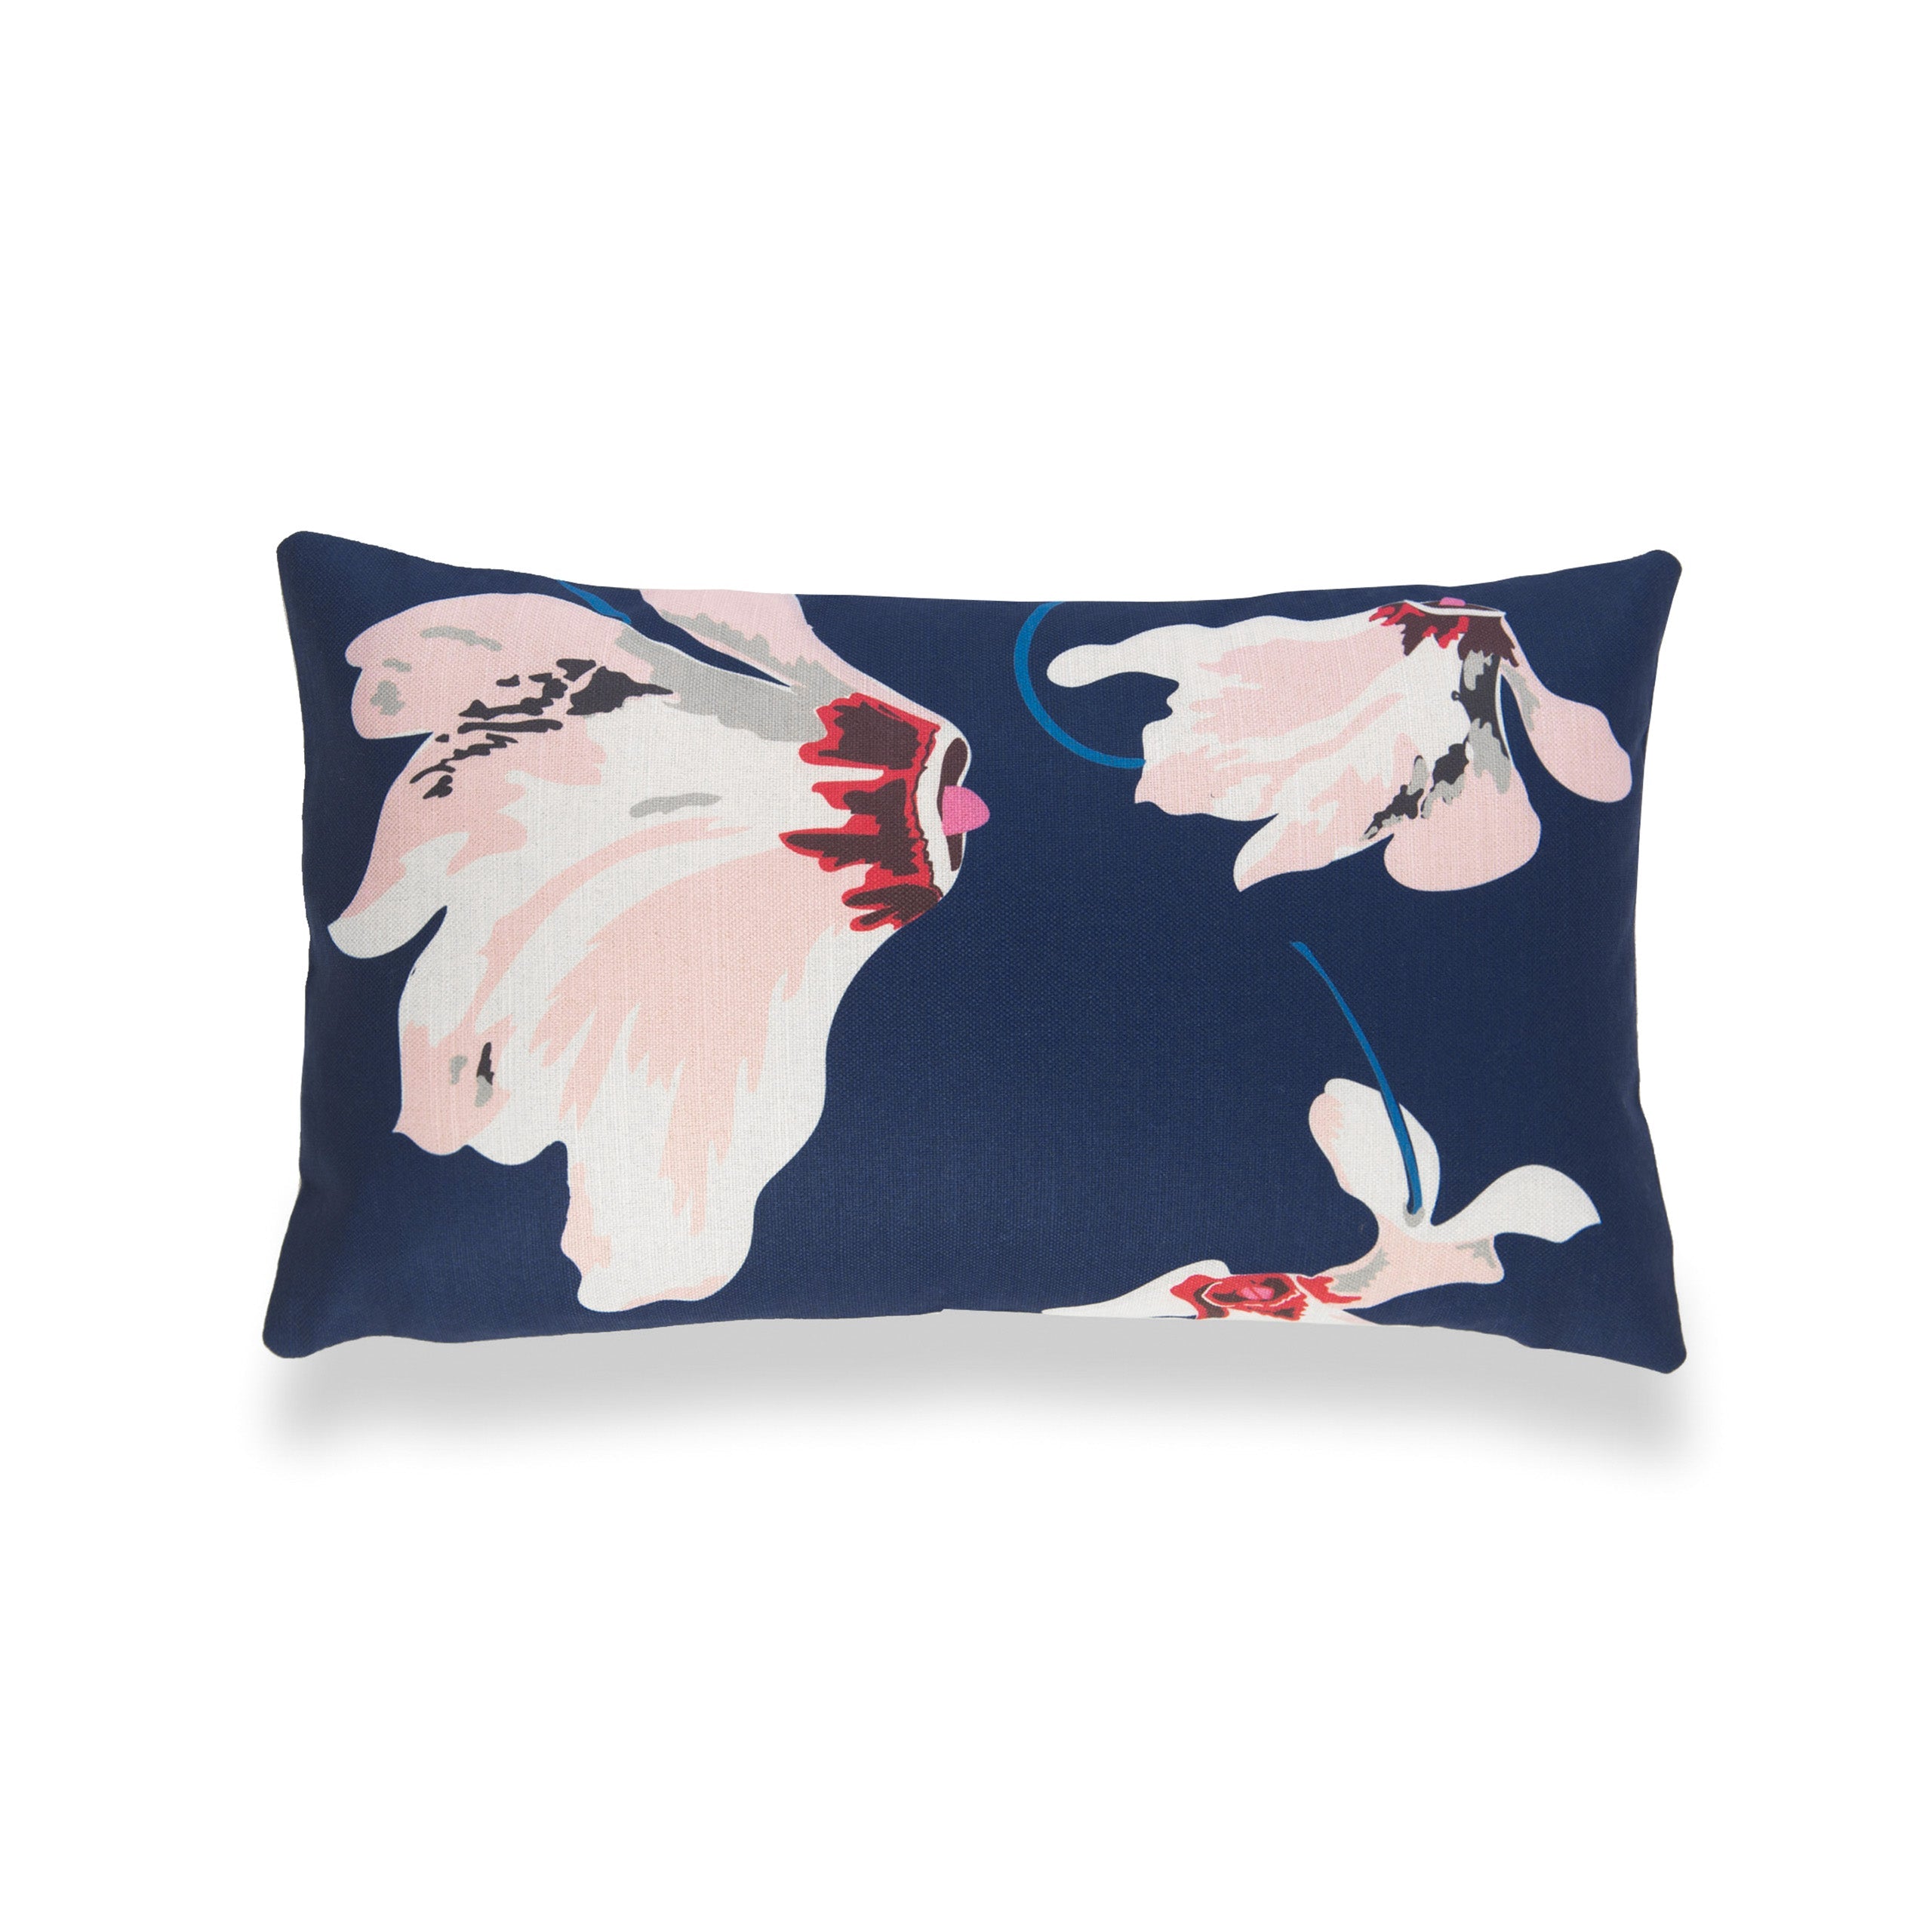 Spring Indoor Outdoor Lumbar Pillow Cover, Floral, Navy Blue Pink, 12"x20"-0